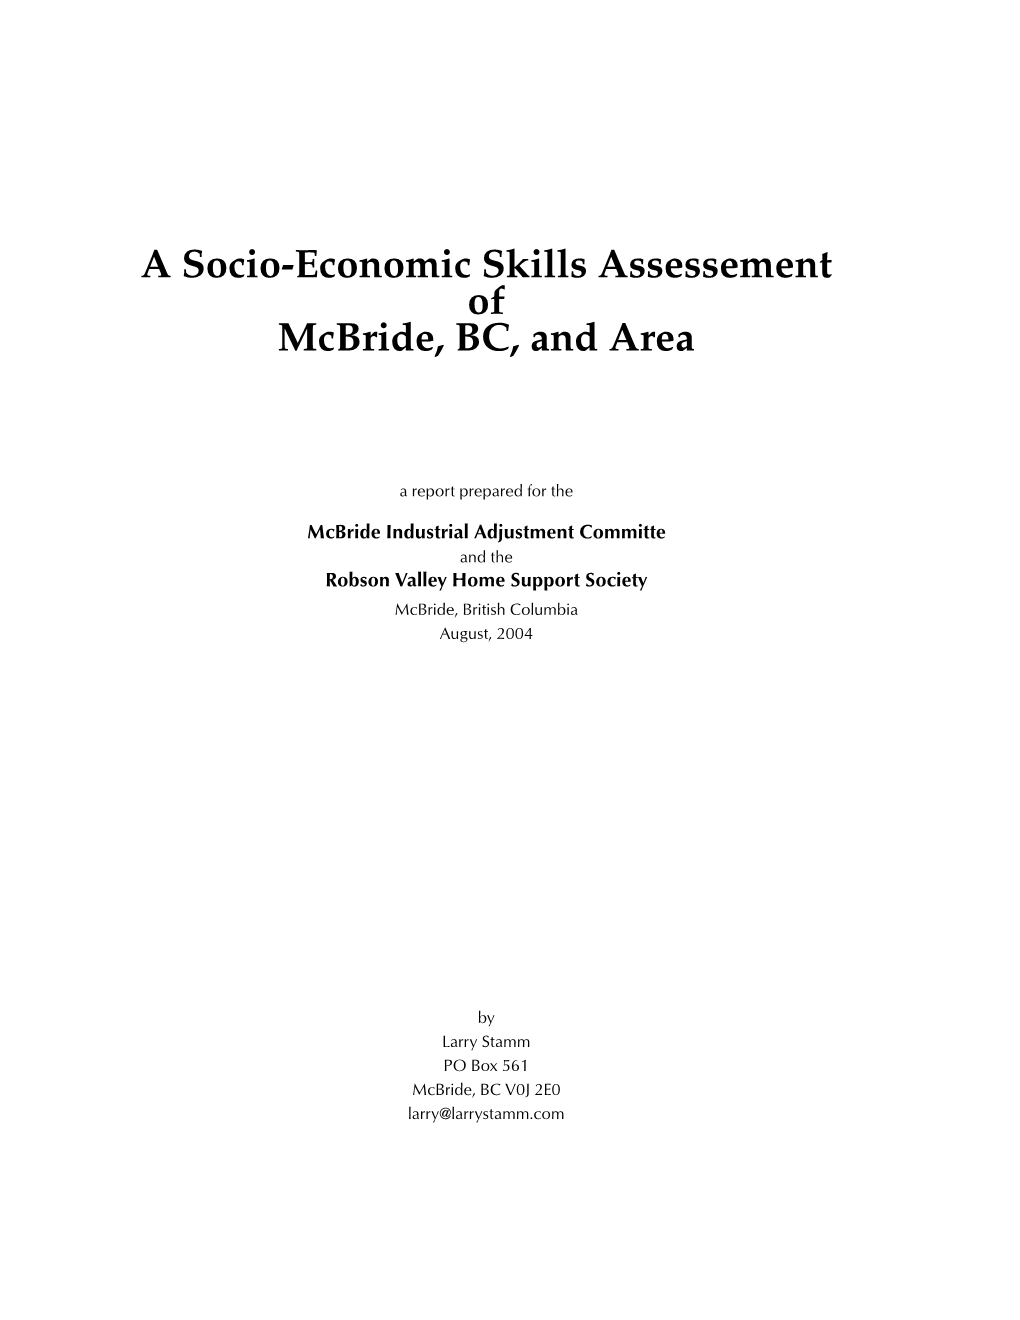 A Socio-Economic Skills Assessement of Mcbride, BC, and Area